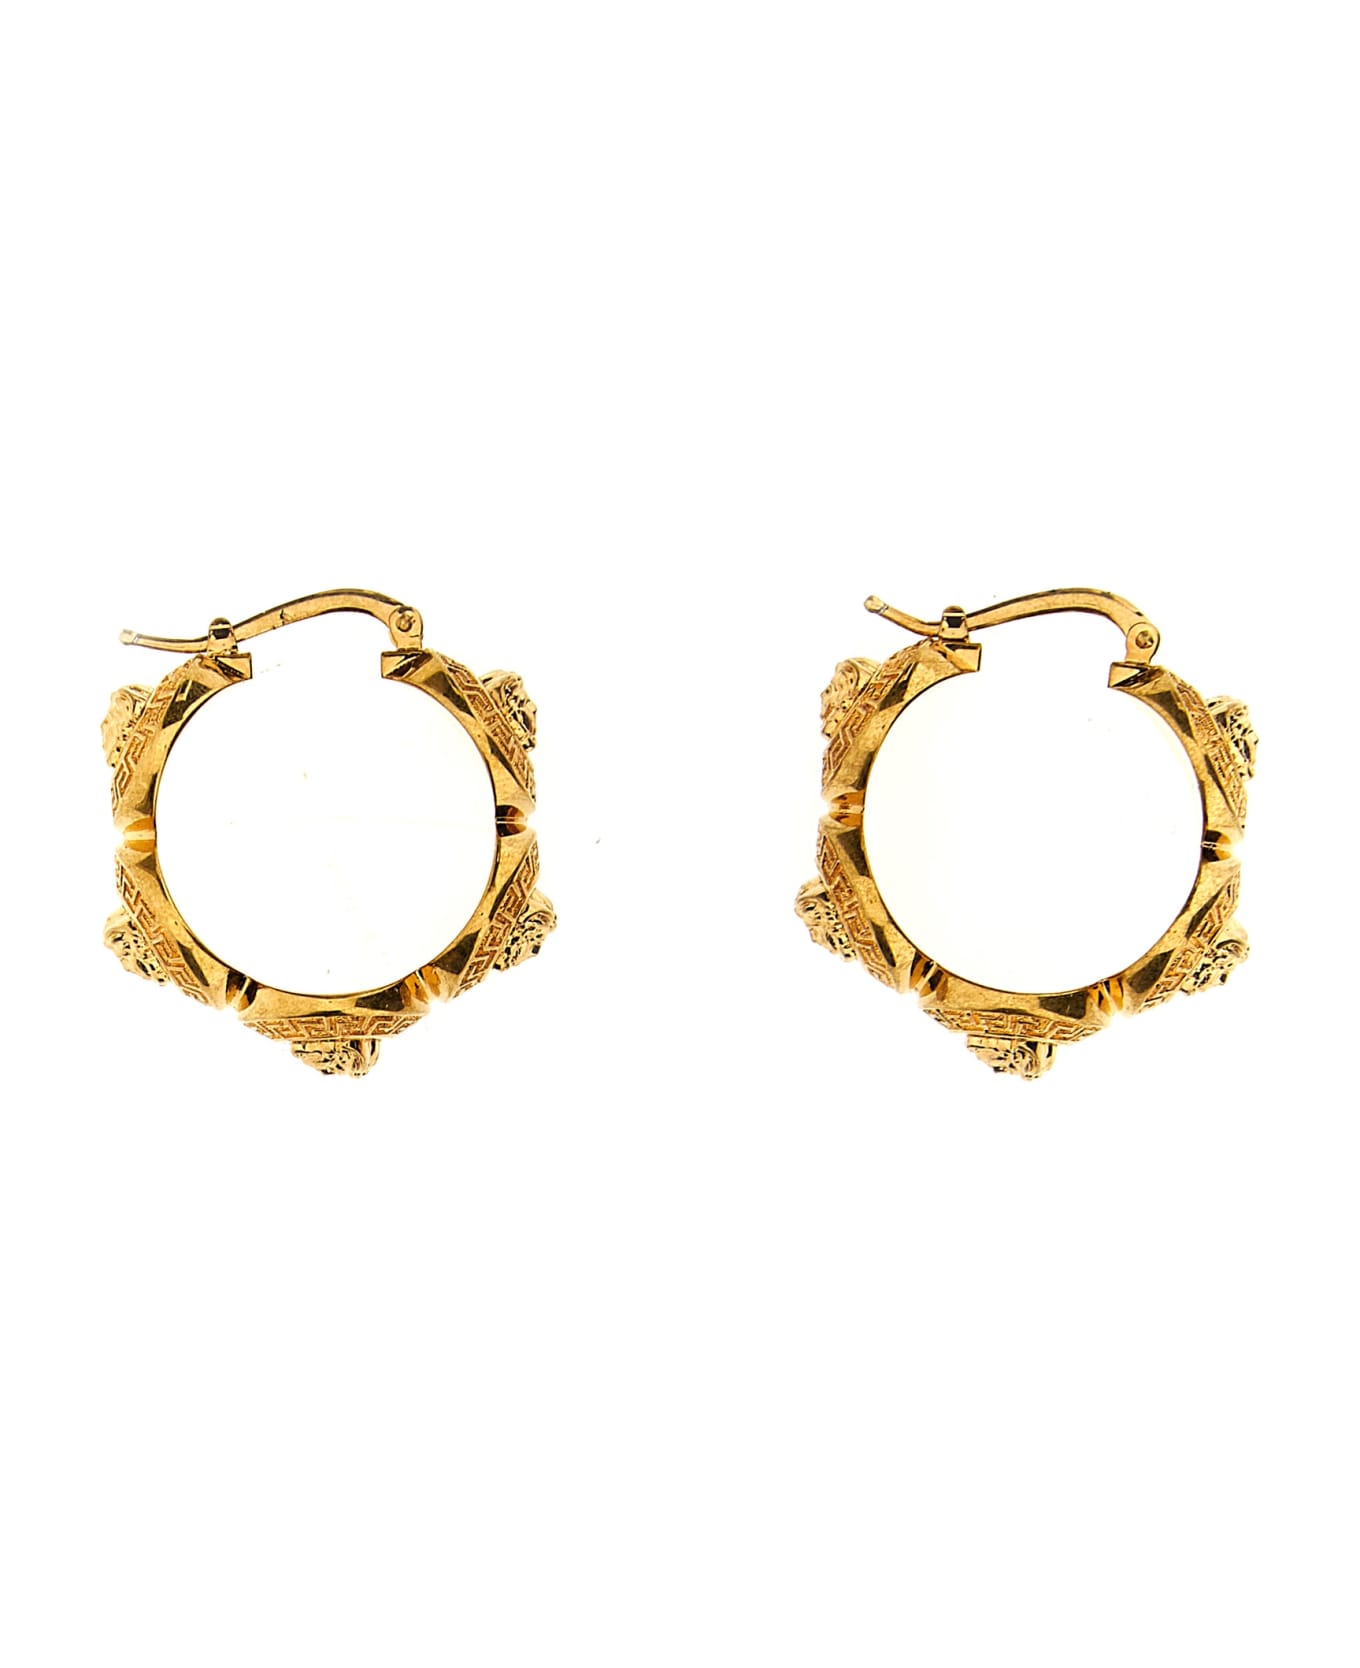 Versace 'tribute Medusa' Earrings - GOLD イヤリング